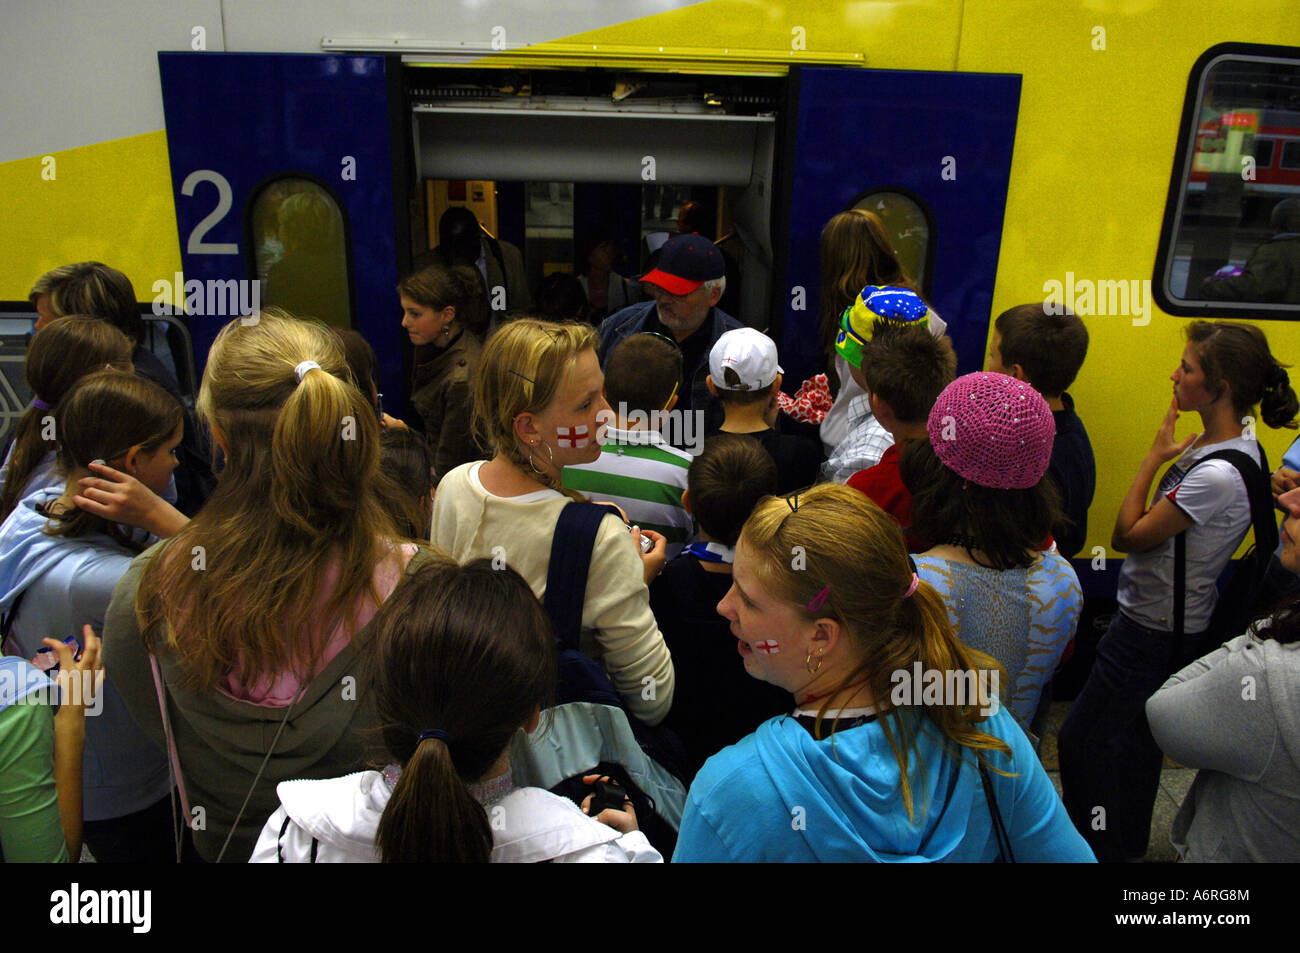 crowd teens teenagers germany german deustchland dortmund underground u bahn public transport transportation train boarding crow Stock Photo